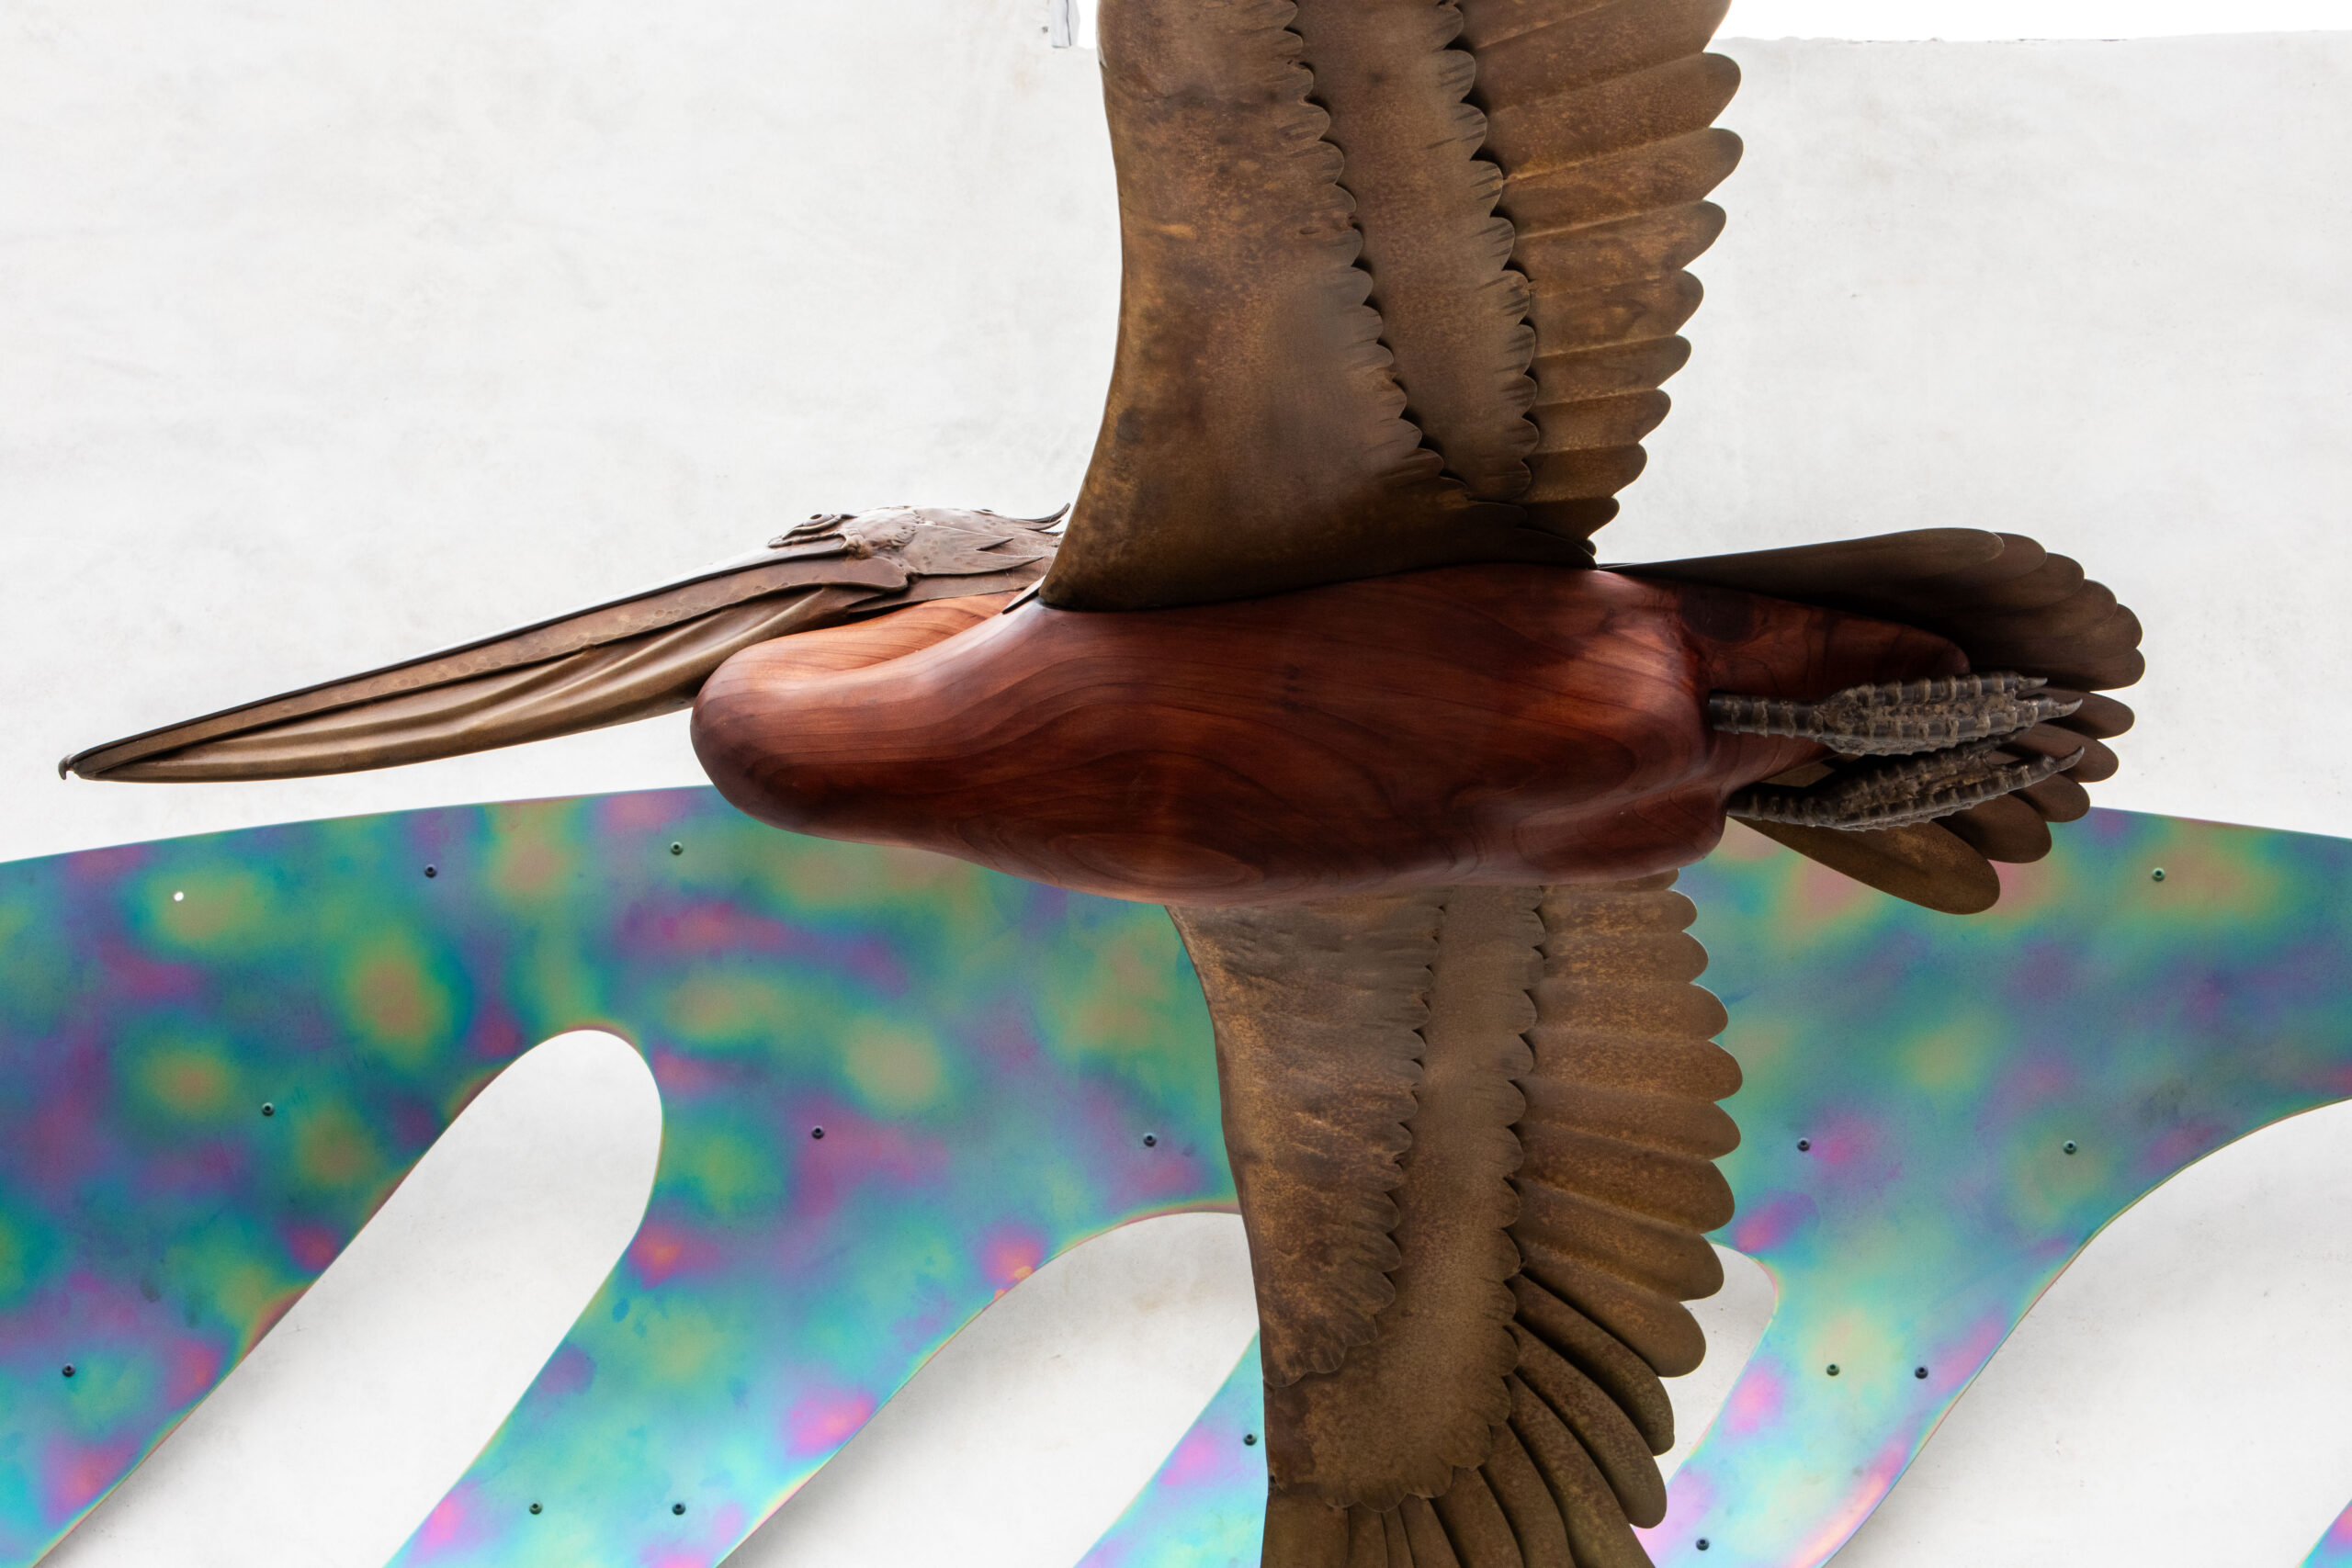 Redwood pelicans with bronze wings public art Laguna Beach